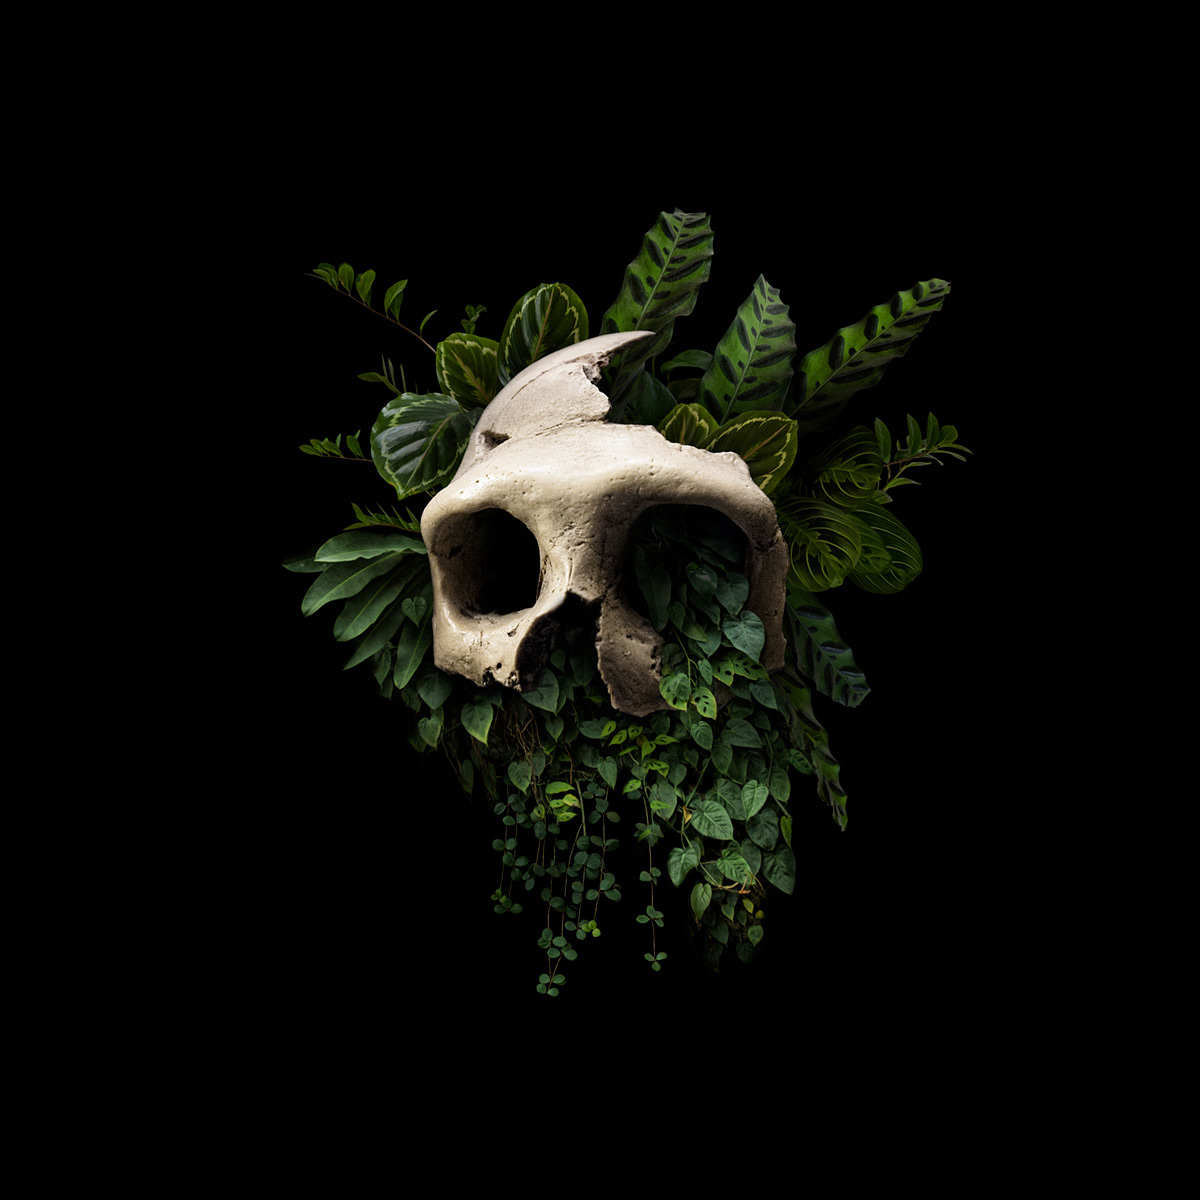 darkness Void memento mori death skull jungle Nature plants art black